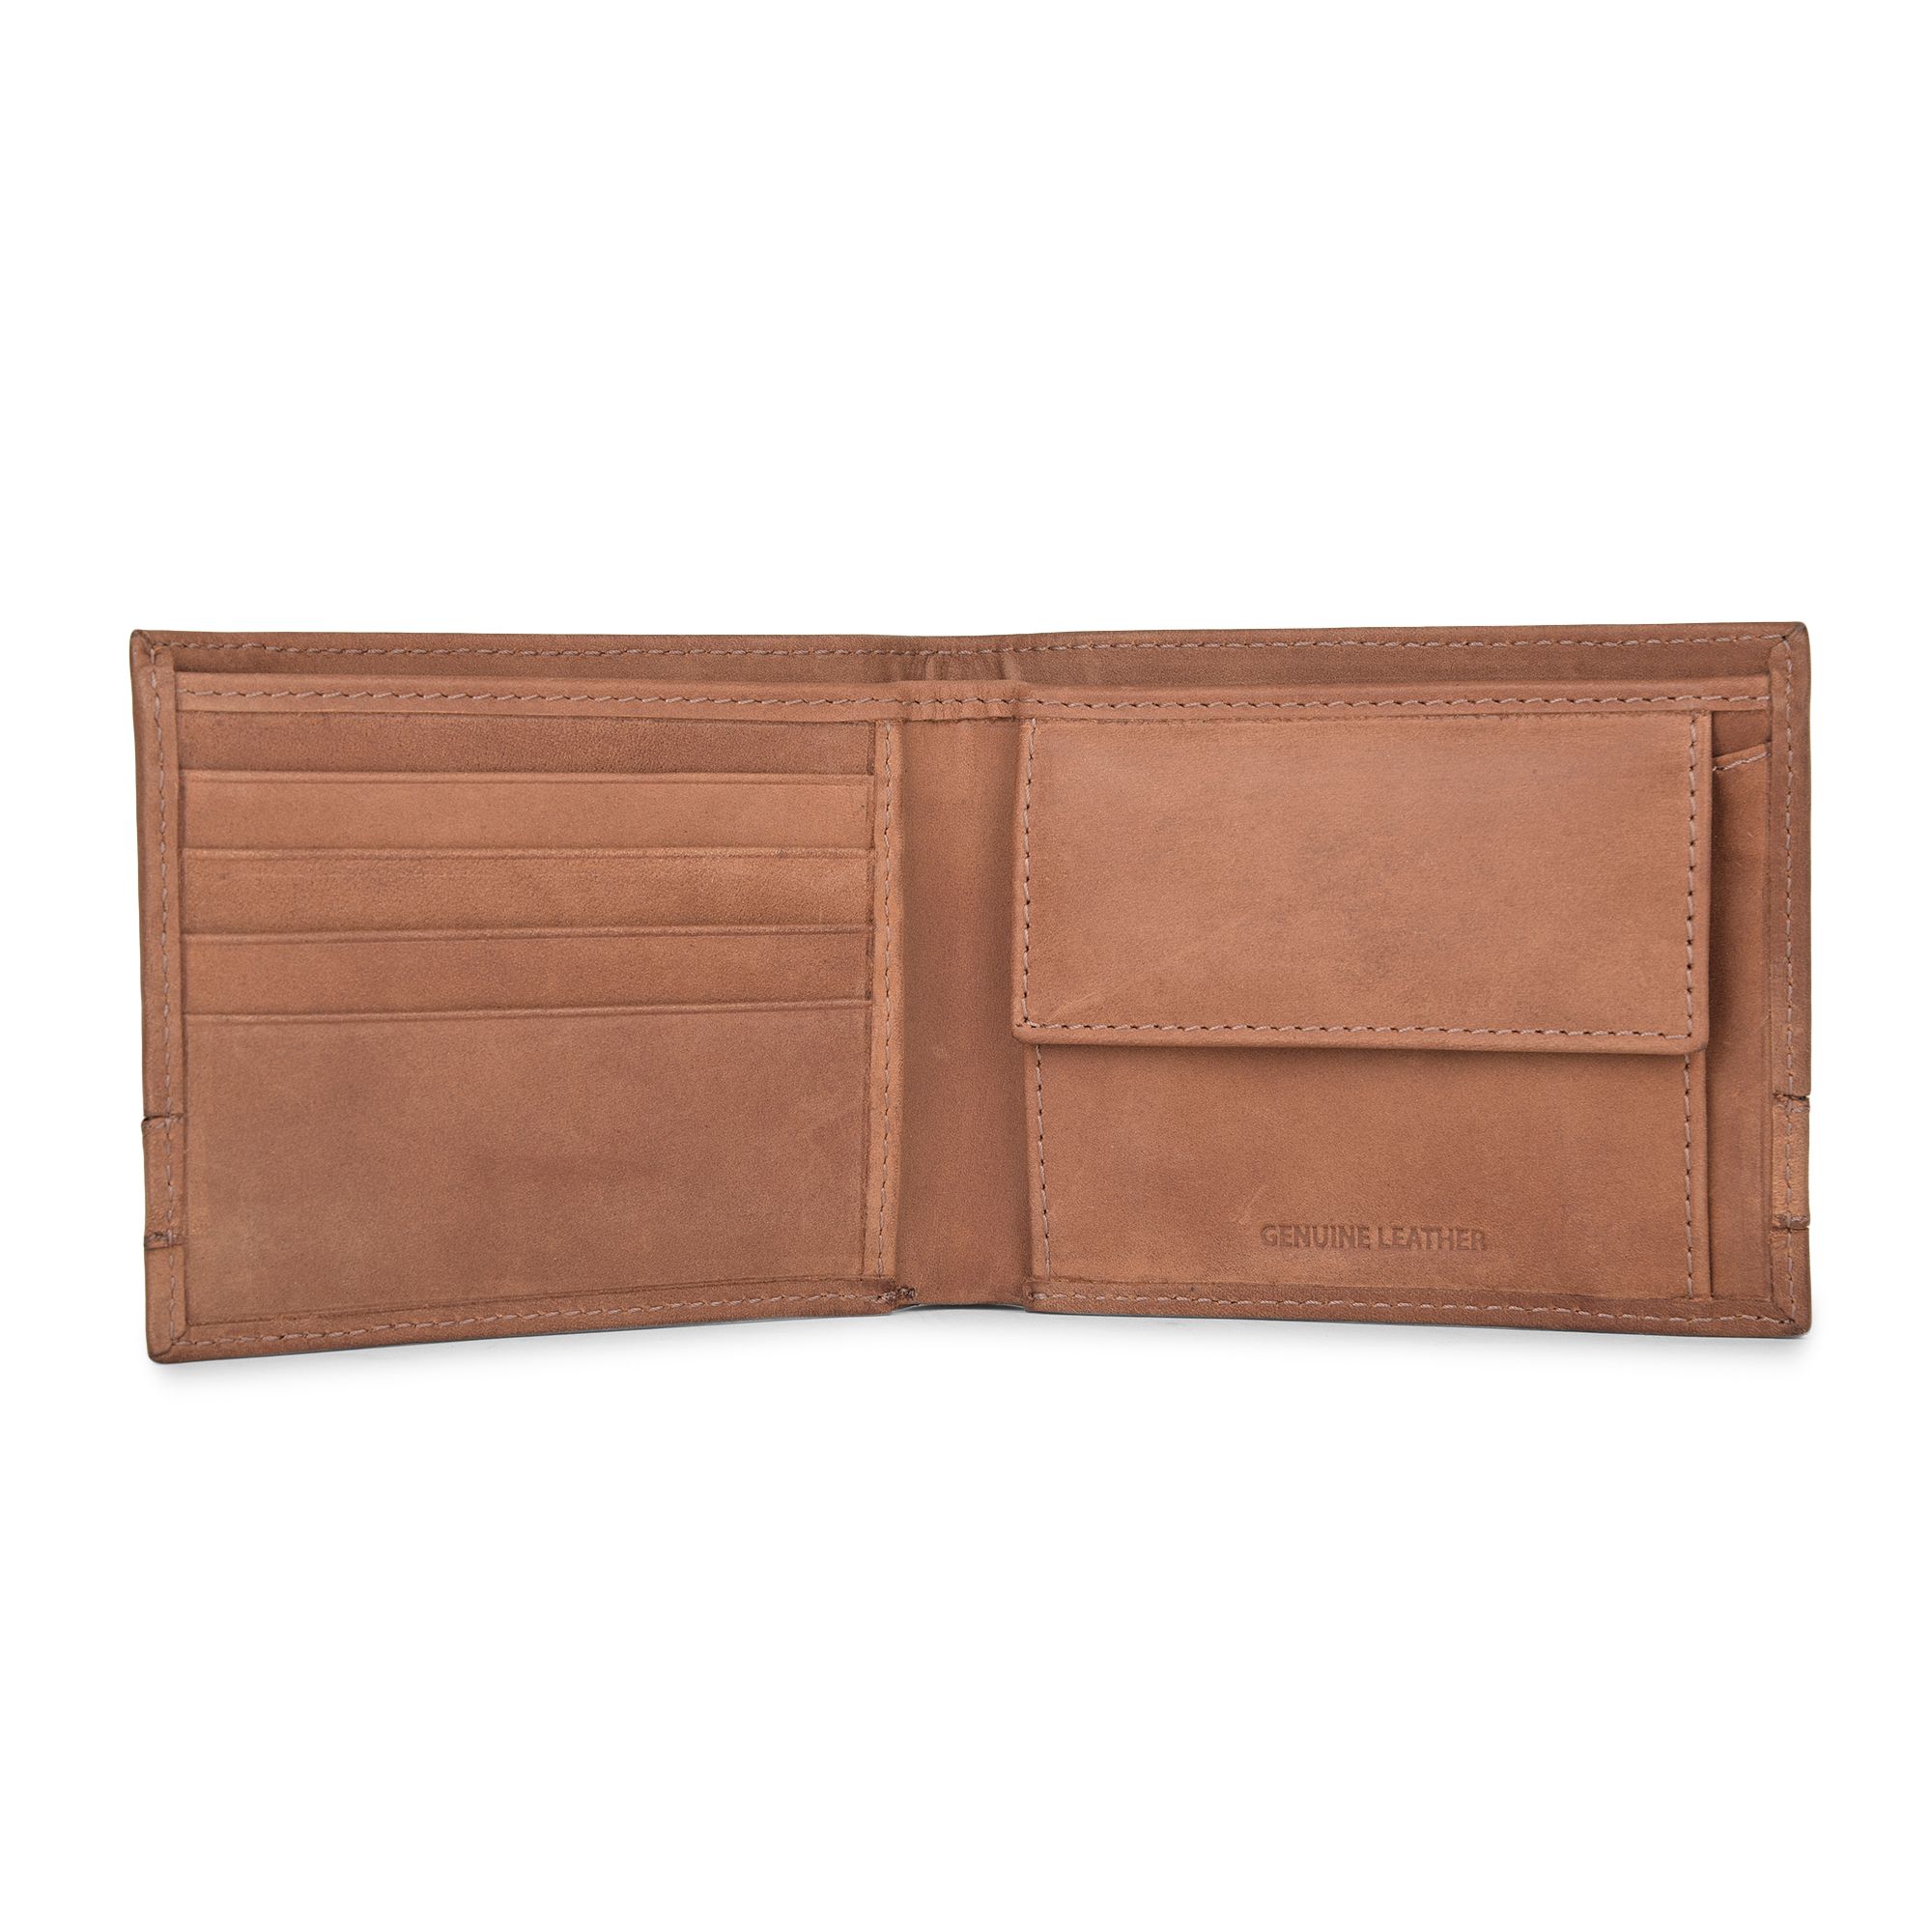 Tan leather wallet for men